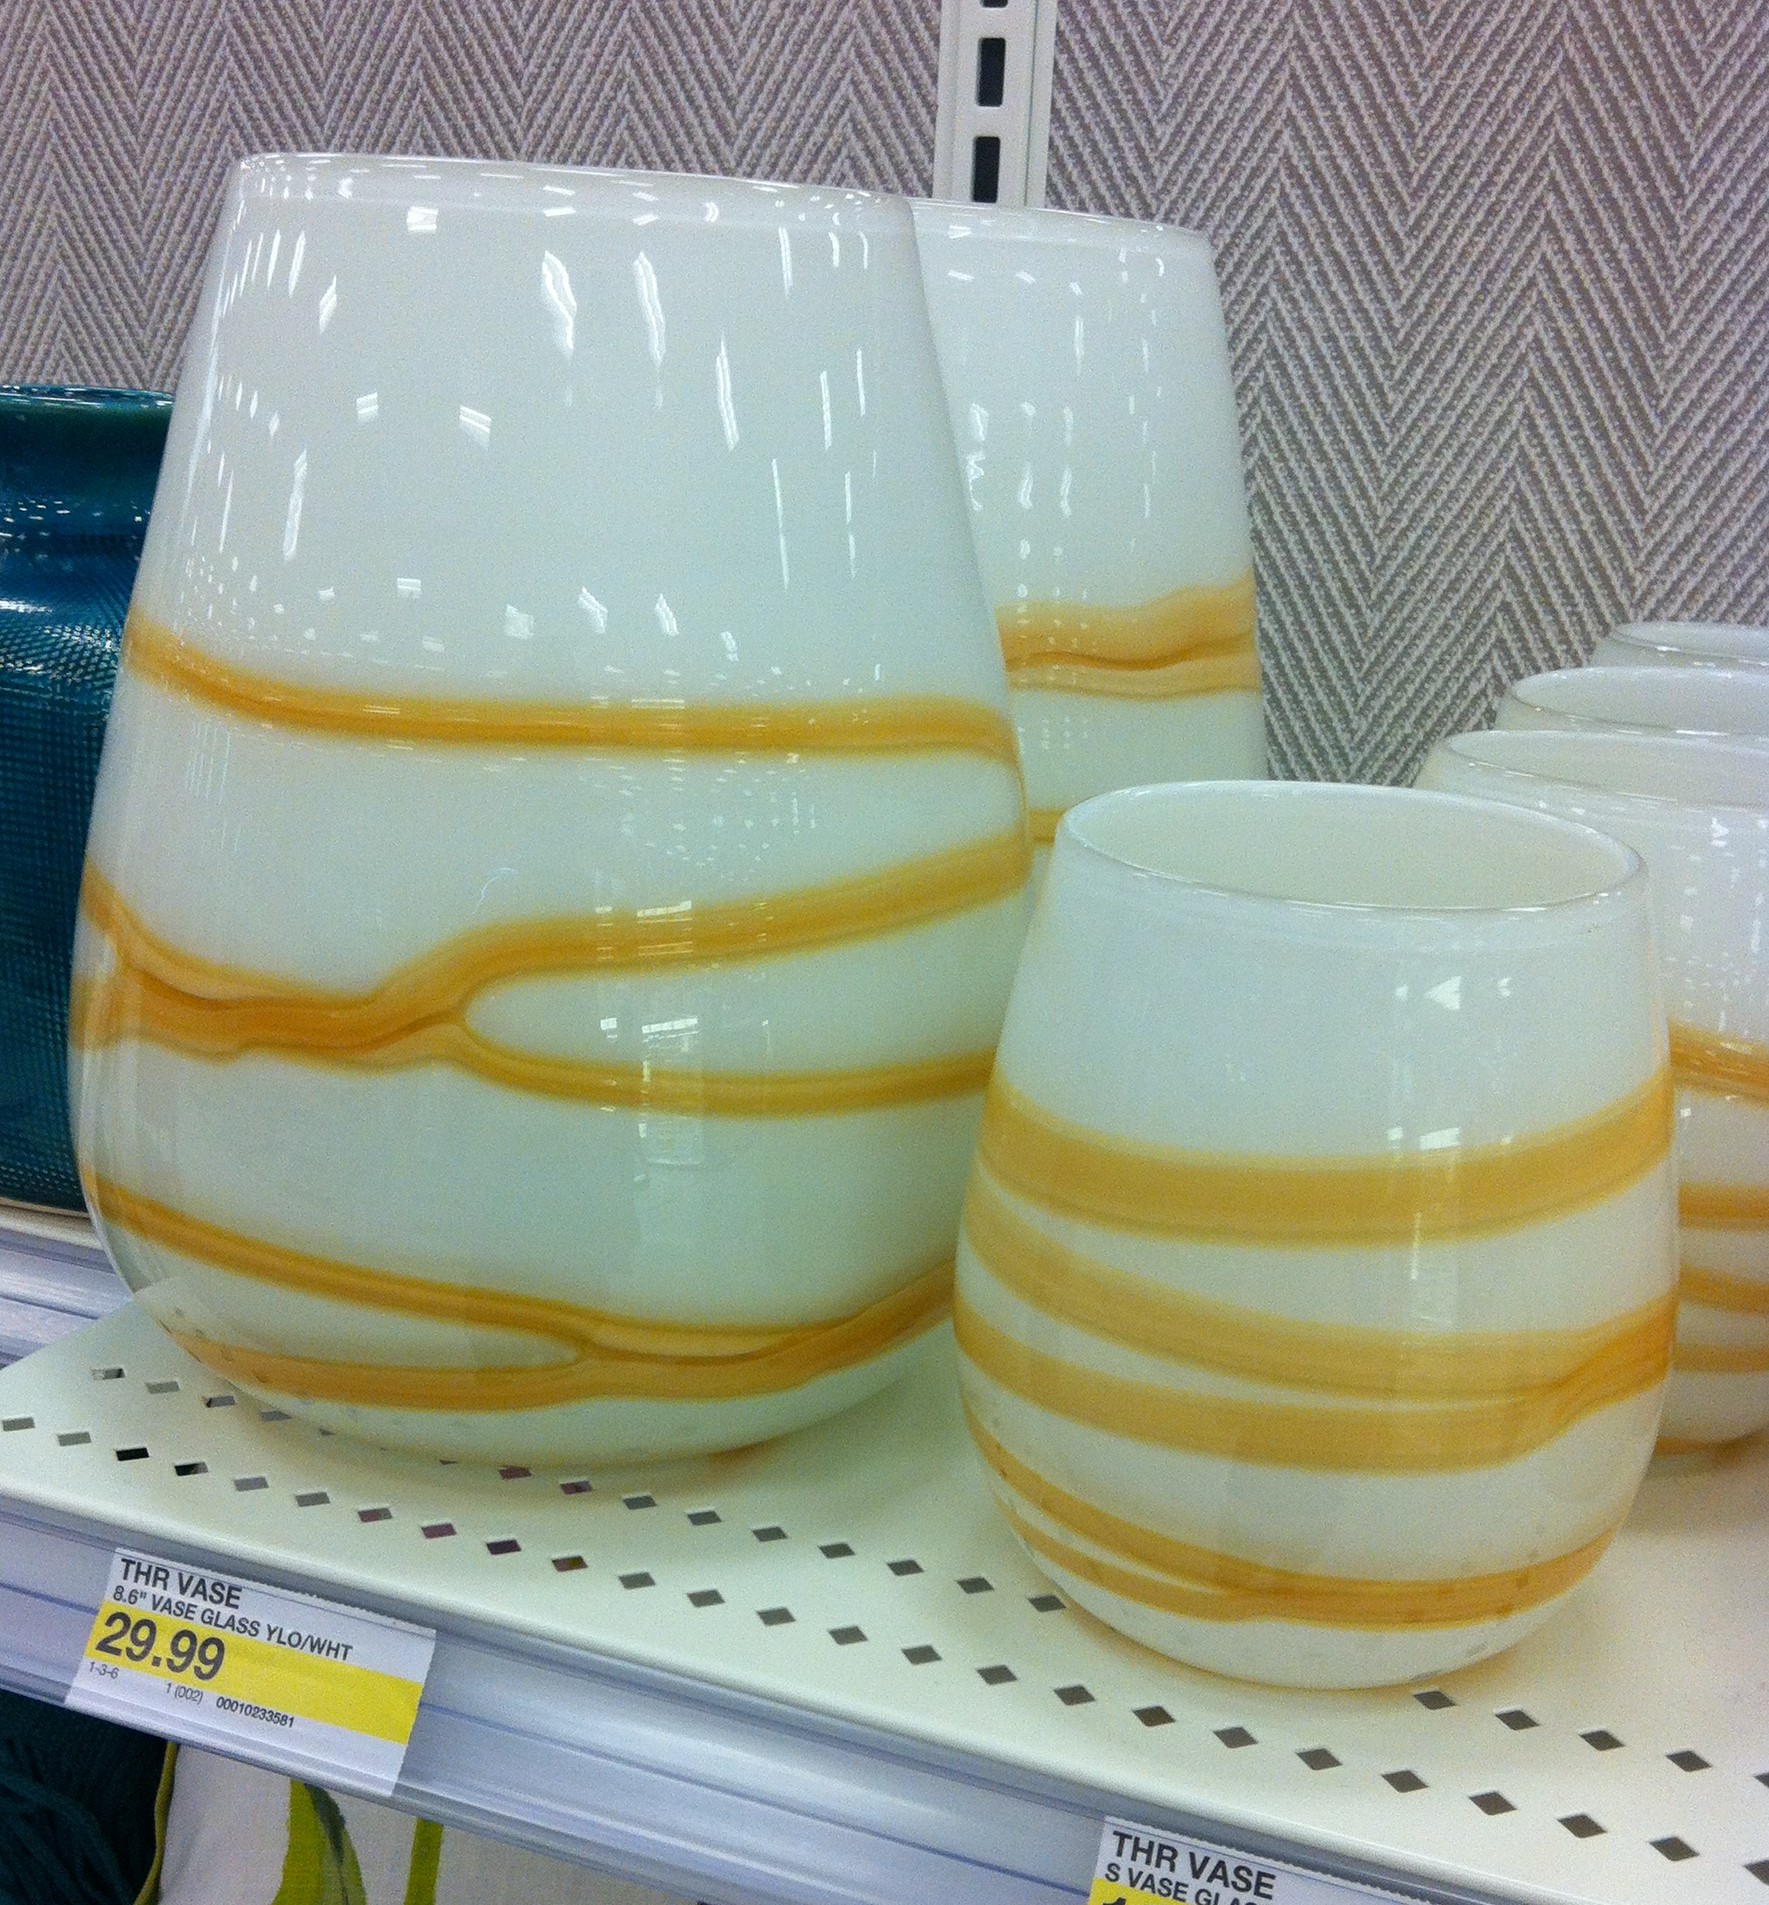 Target yellow vases on the shelf.